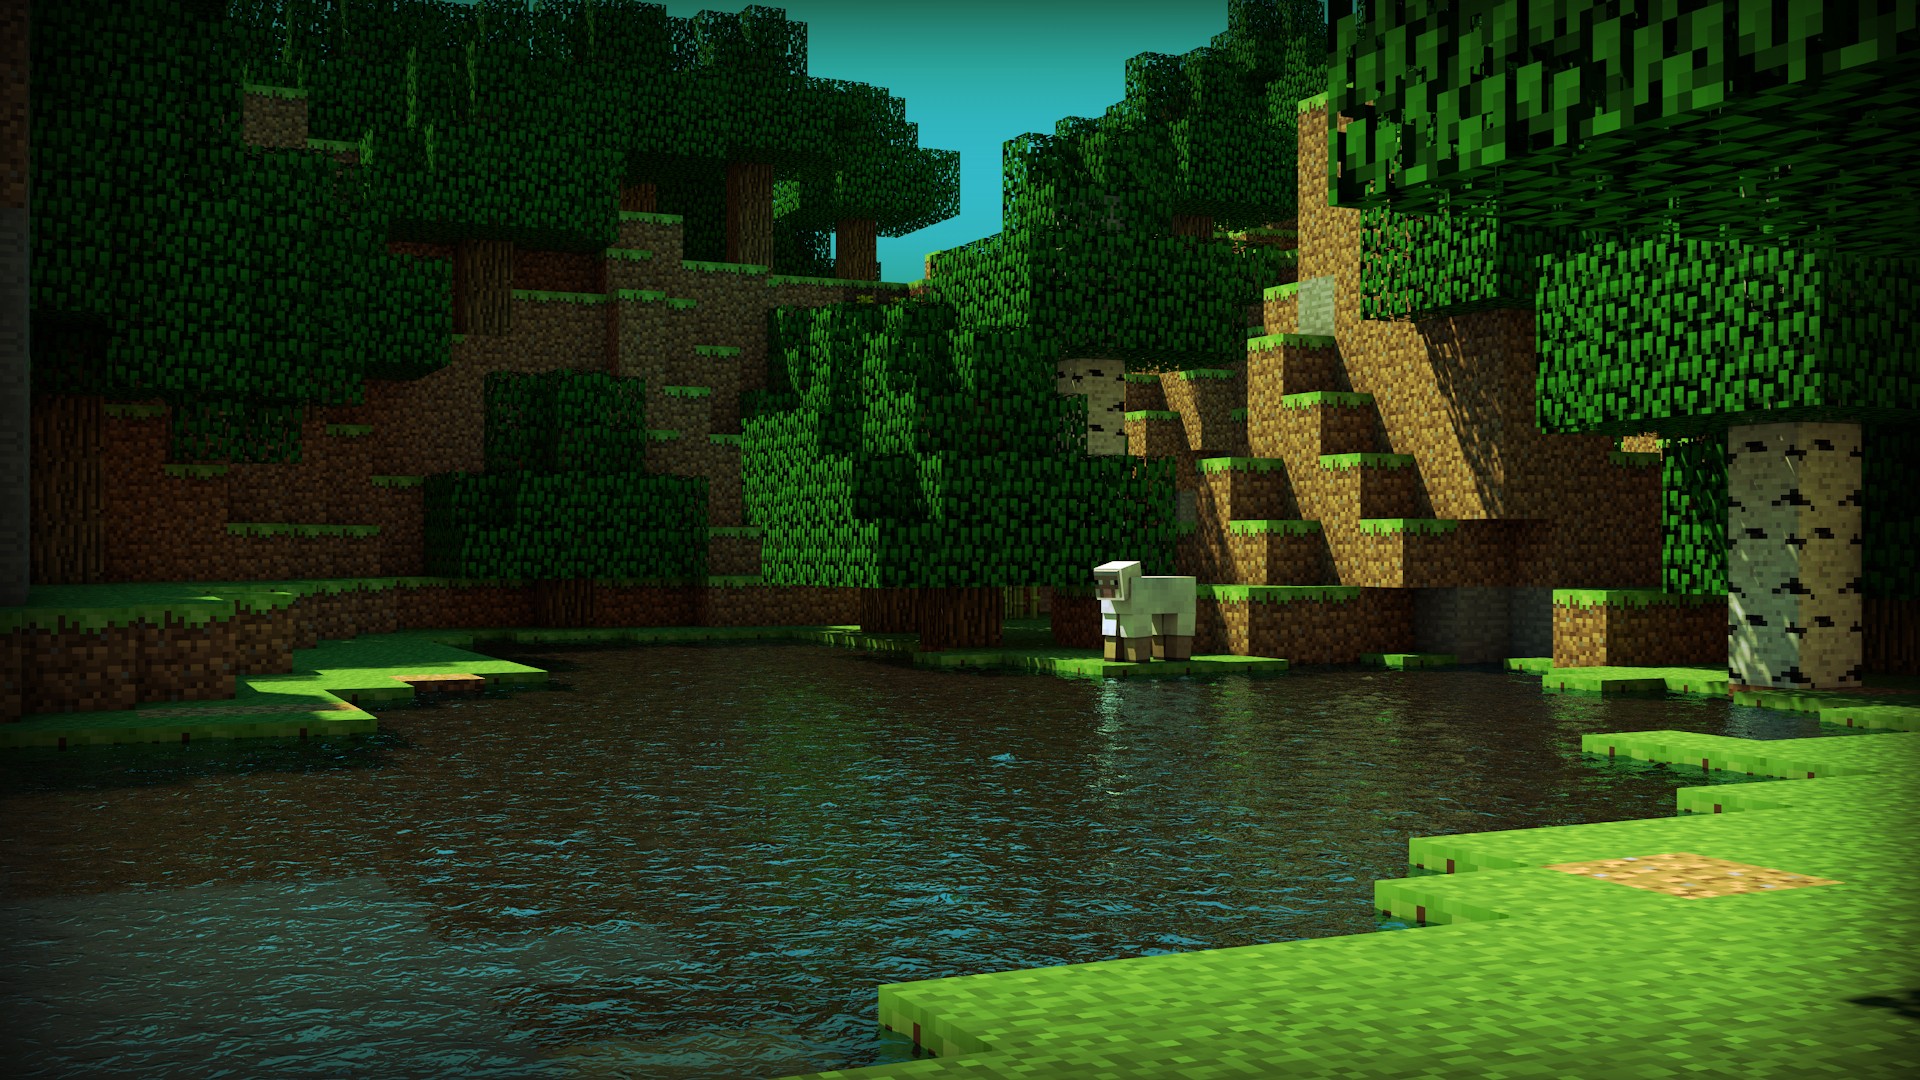 water trees sheep Minecraft skyscapes cinema 4d terrain tapeta renders